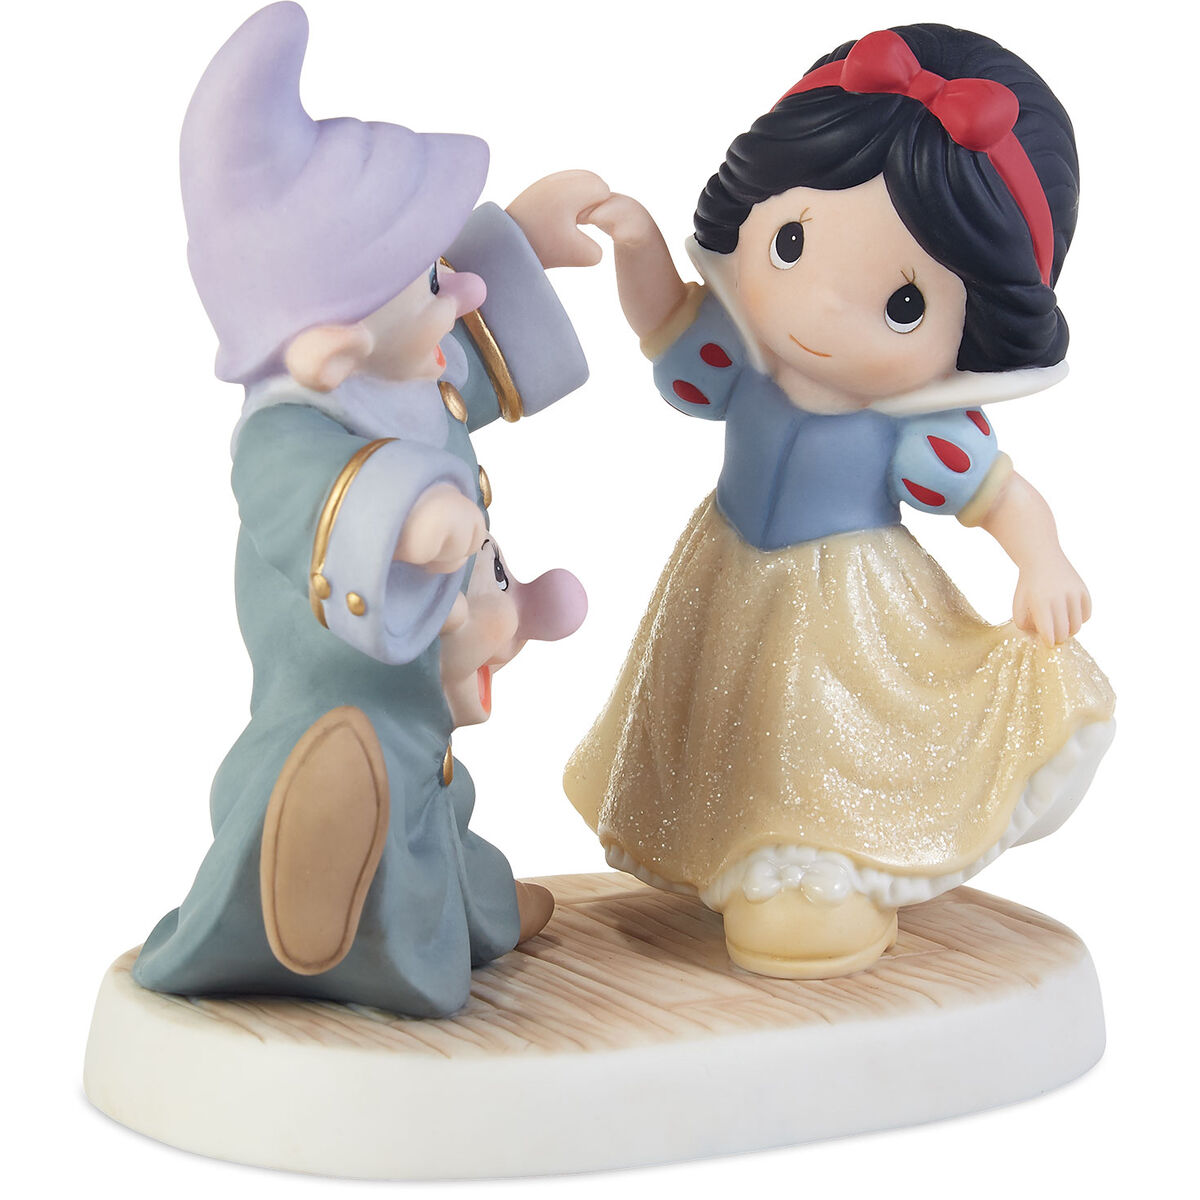 Precious Moments Disney Snow White and Dwarfs Dancing Figurine, 5.5